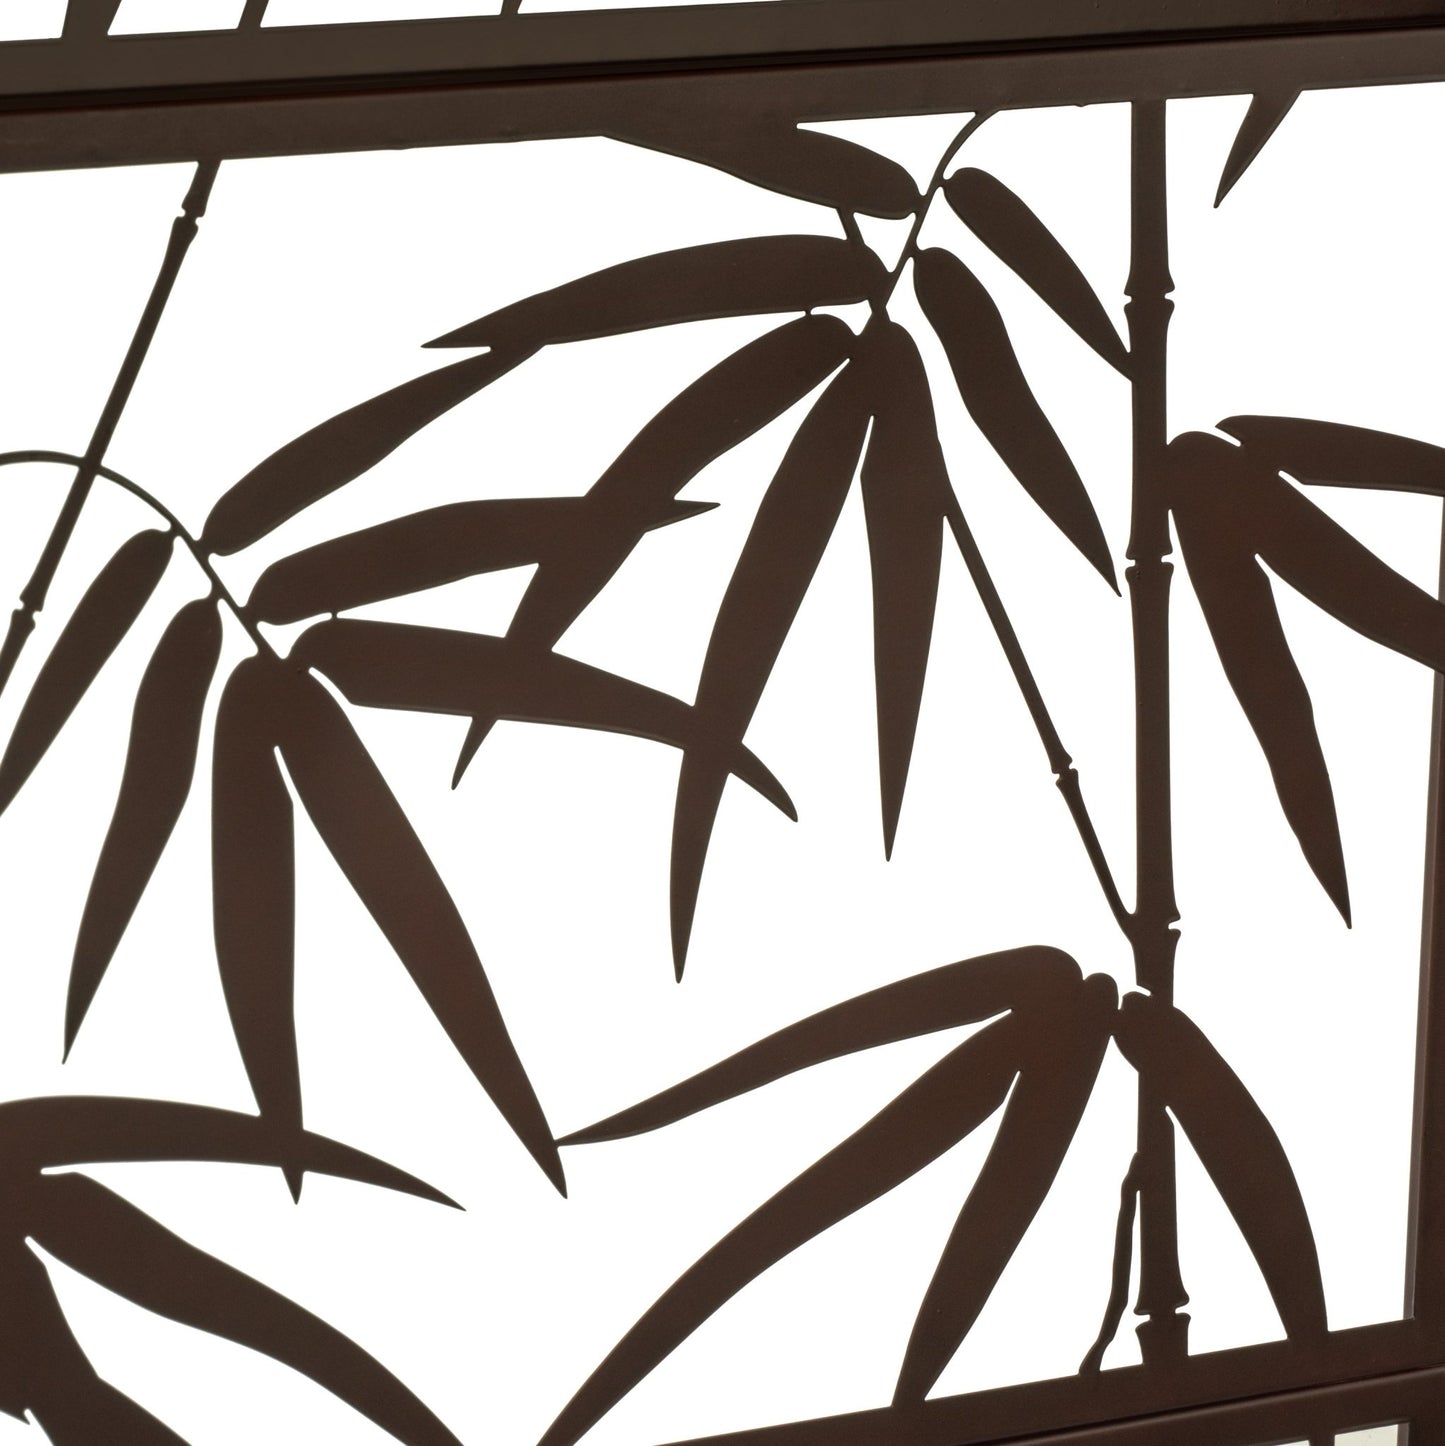 H Potter metal wrought iron trellis Screen Privacy for Patio Deck Balcony Backyard landscape climbing plants yard art